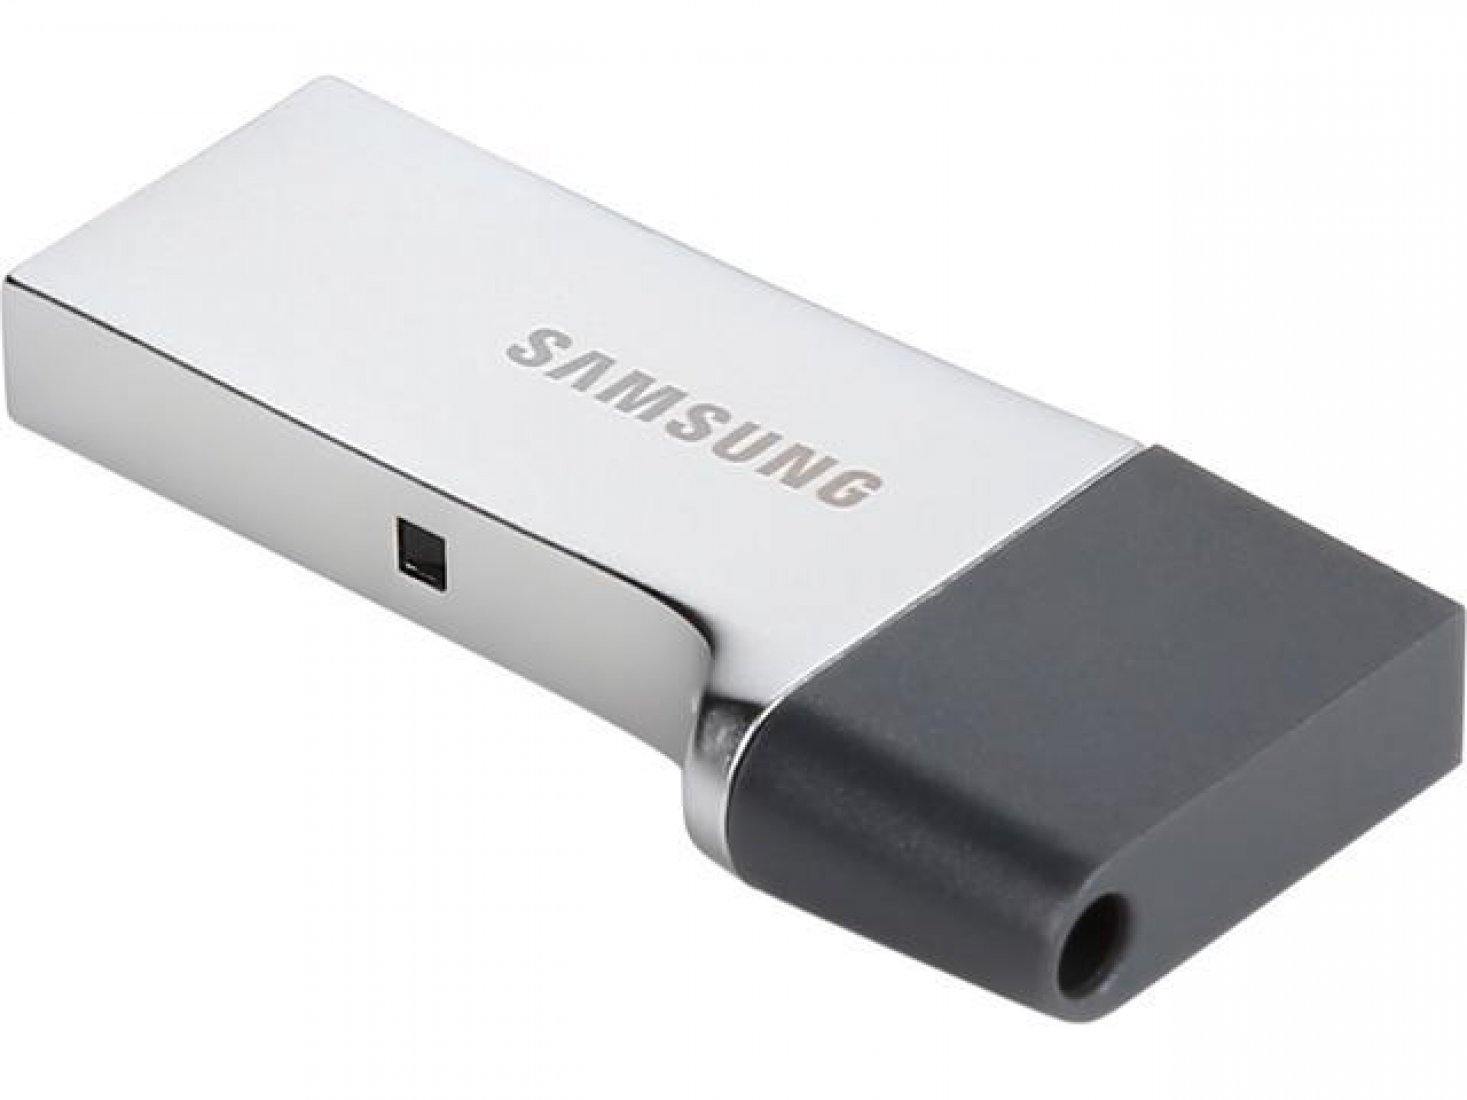 Флешка samsung телефон. Samsung USB 3.1 Flash Drive Duo Plus. Флешка Samsung USB 3.0 Flash Drive Duo 64gb. Samsung 64gb USB3.0 флешка. OTG USB Flash 32 ГБ Samsung Duo Plus.